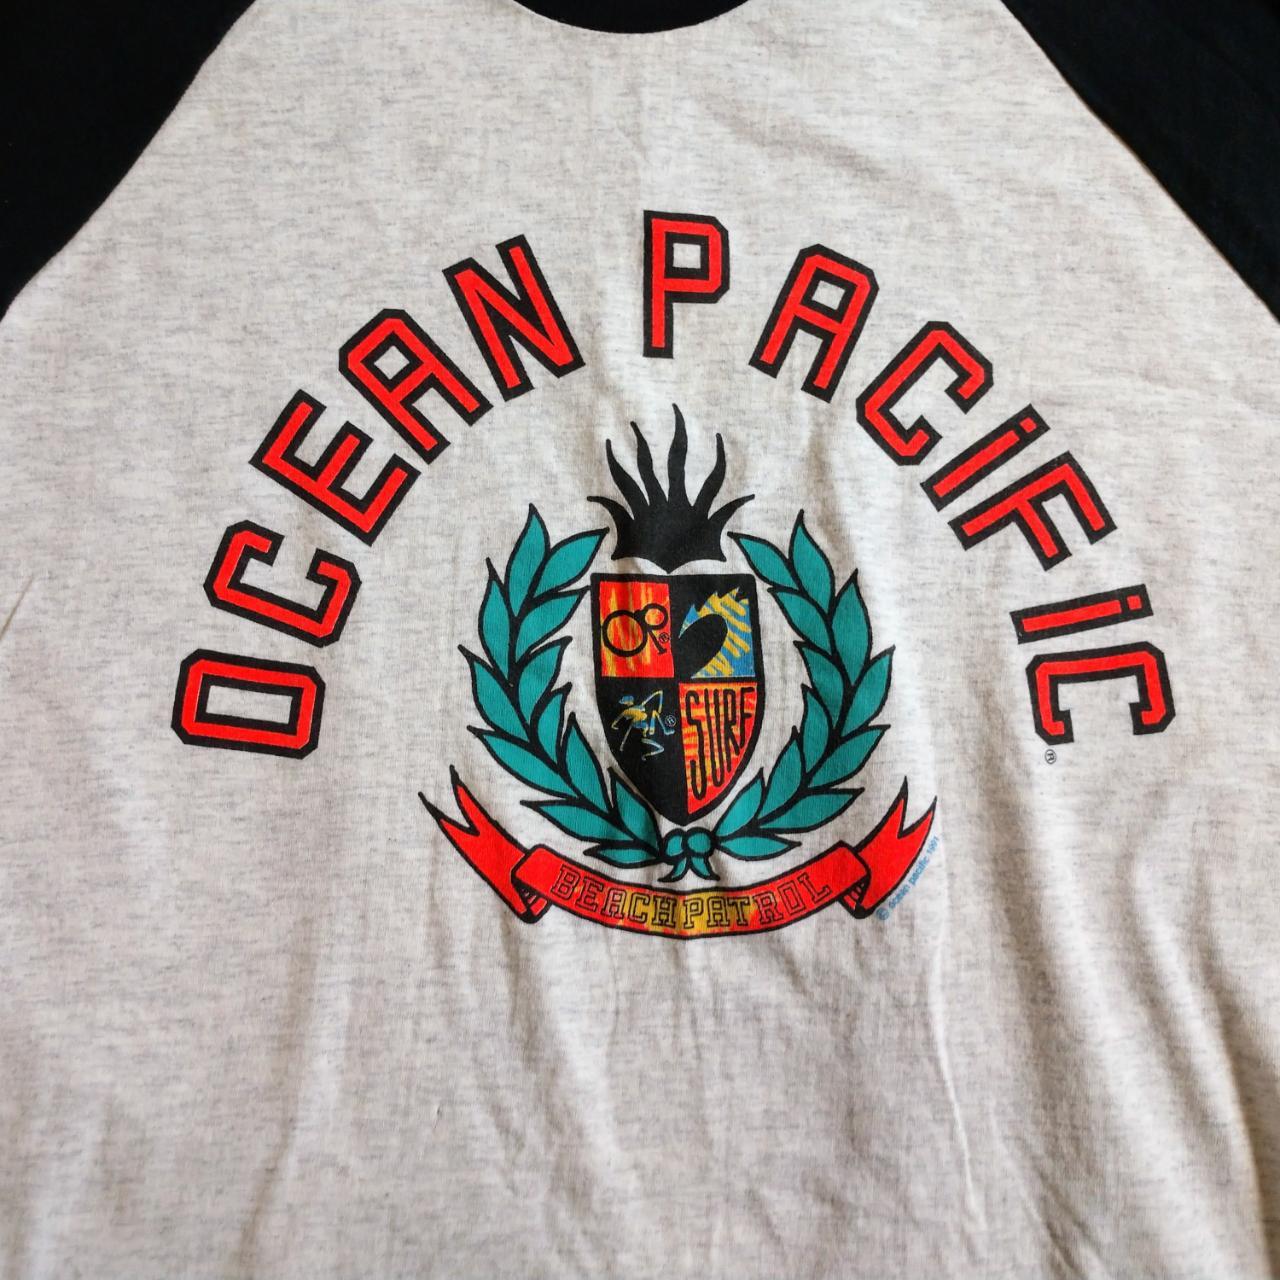 Ocean Pacific Men's Grey and Black T-shirt (4)